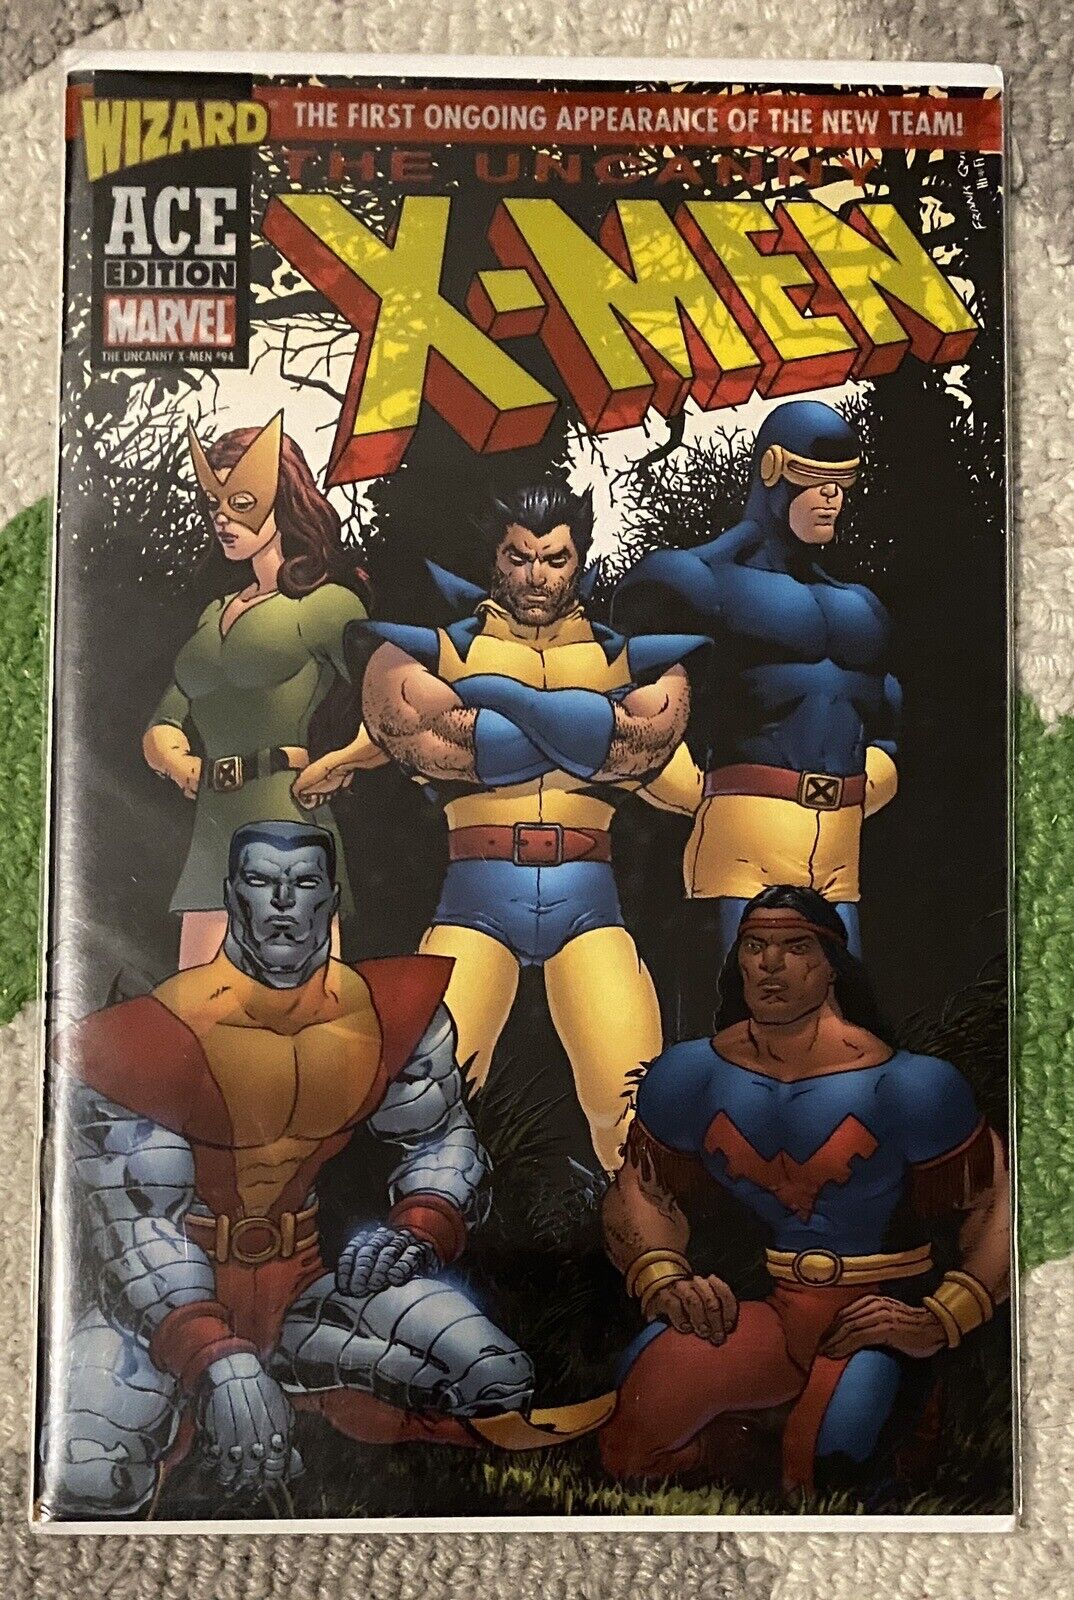 UNCANNY X-MEN #94 WIZARD ACE Edition  - Marvel - Frank Quitely Cover - Grade VF